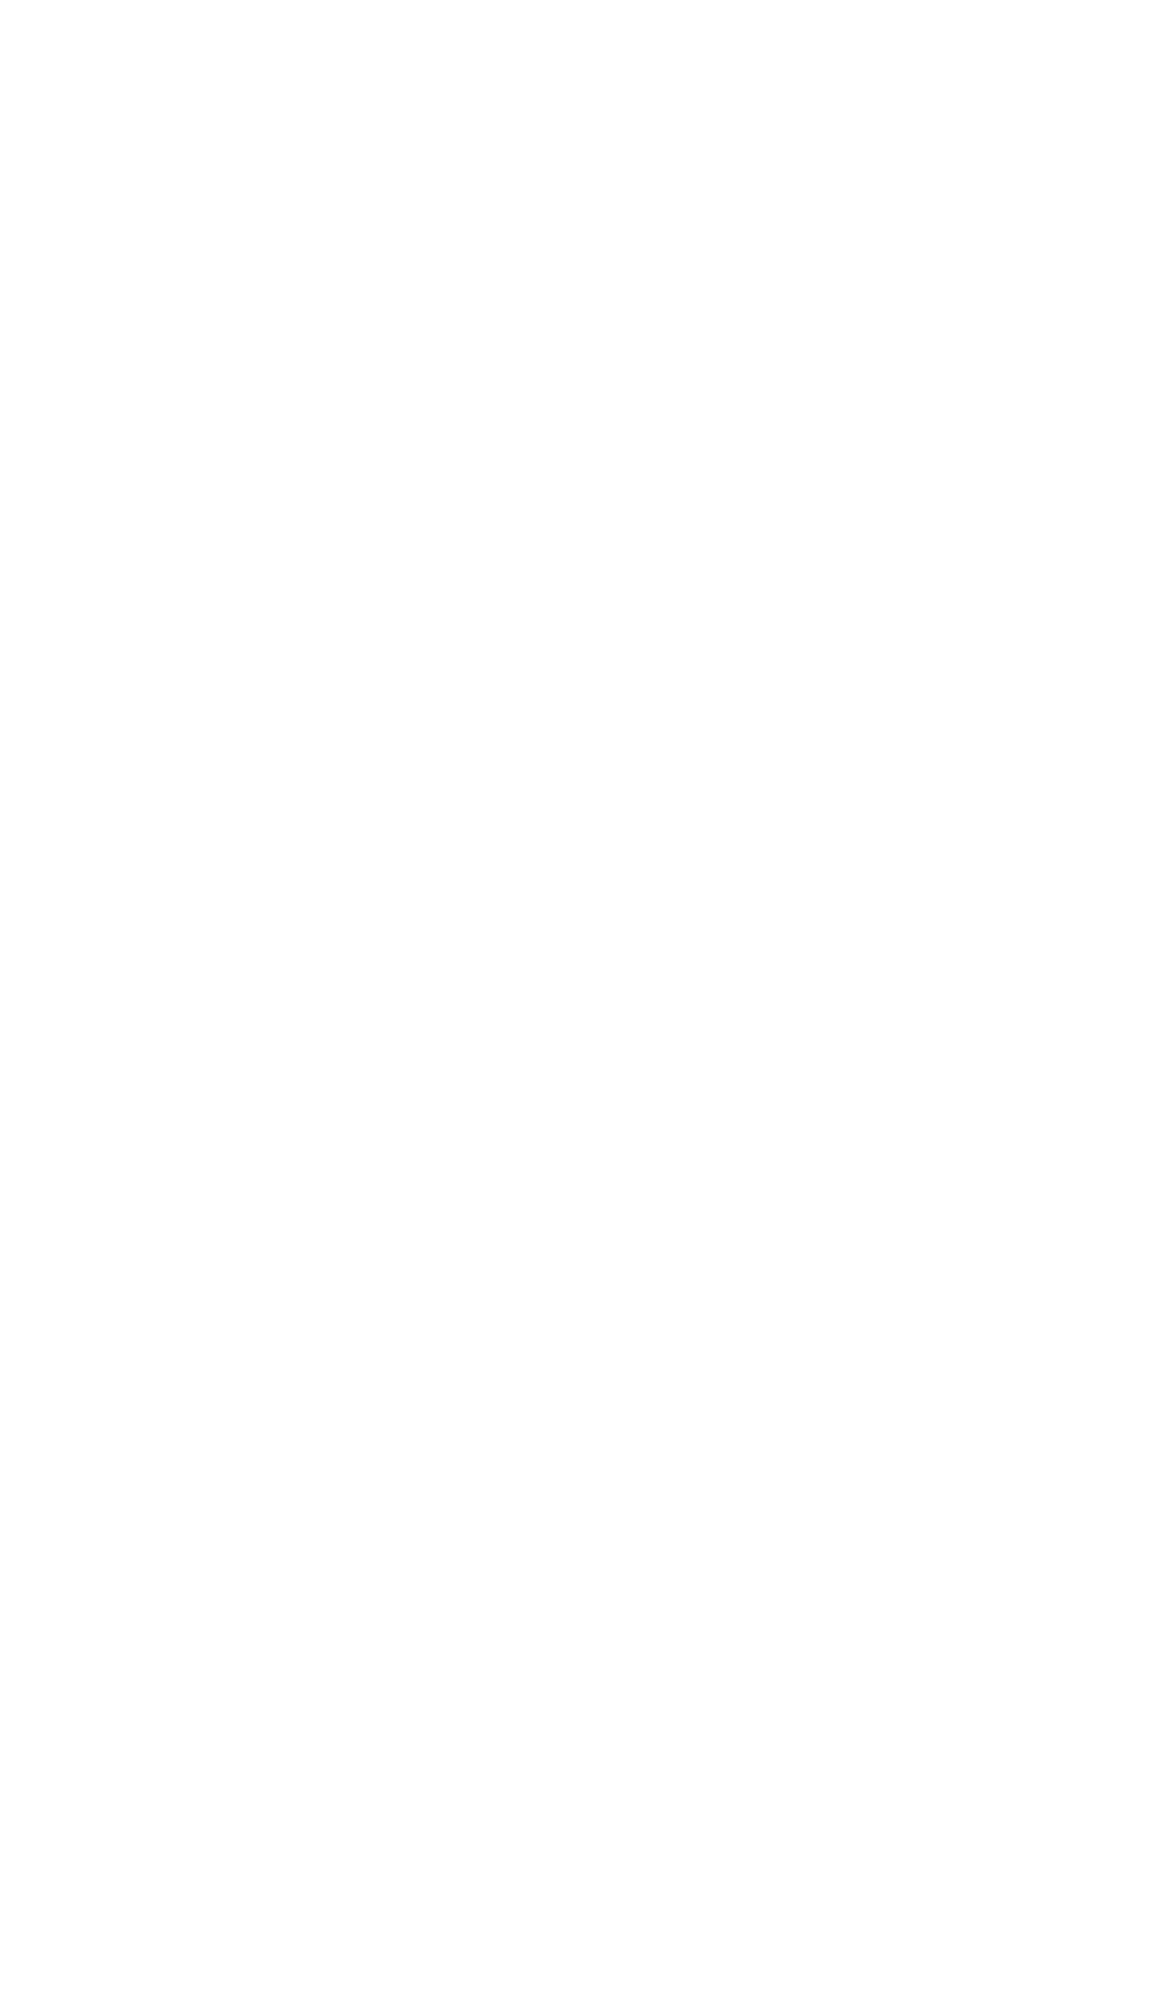 Craft Beer Association